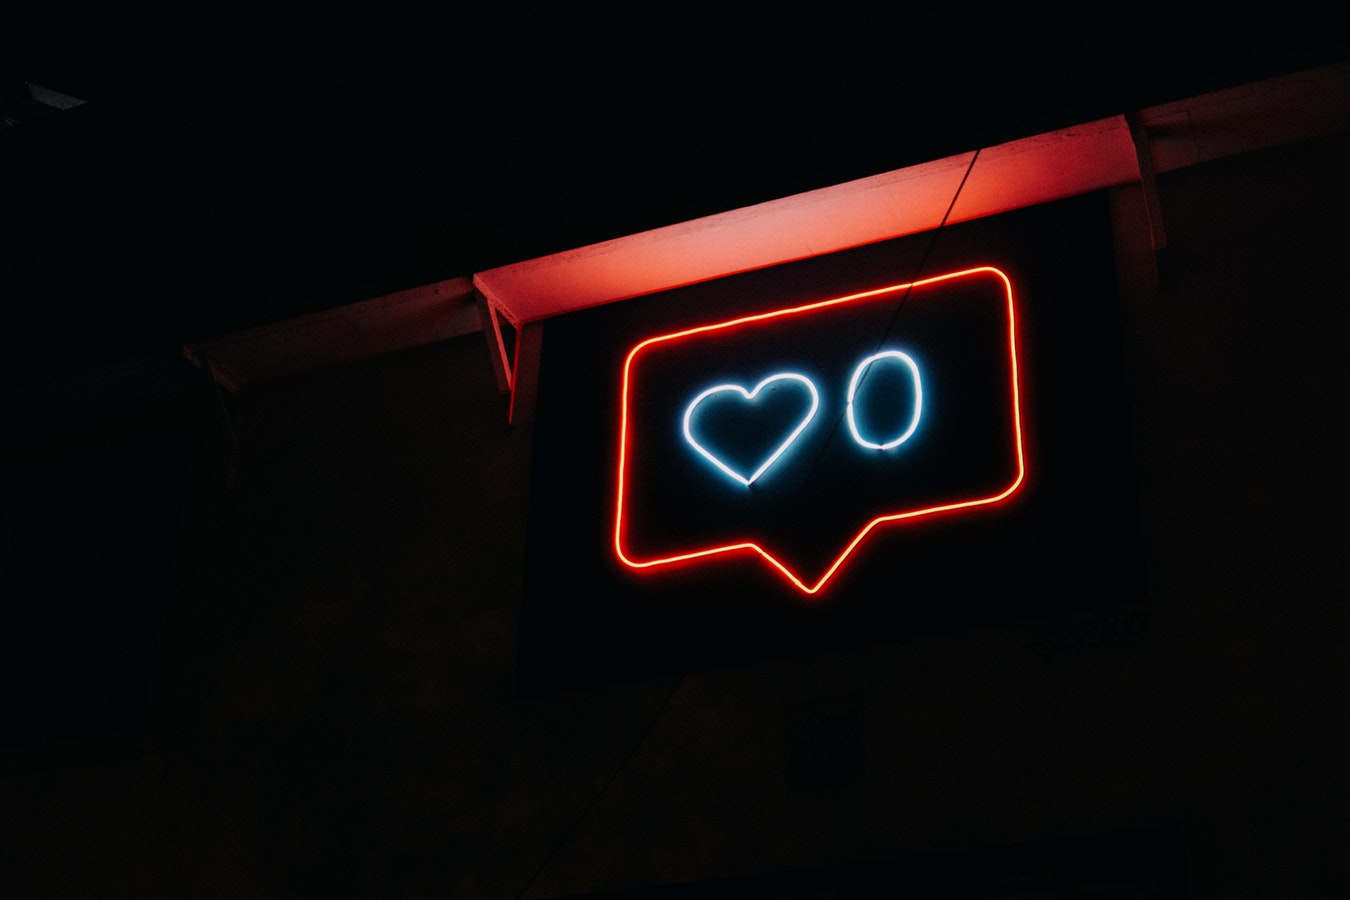 Neon post showing social media likes as zero